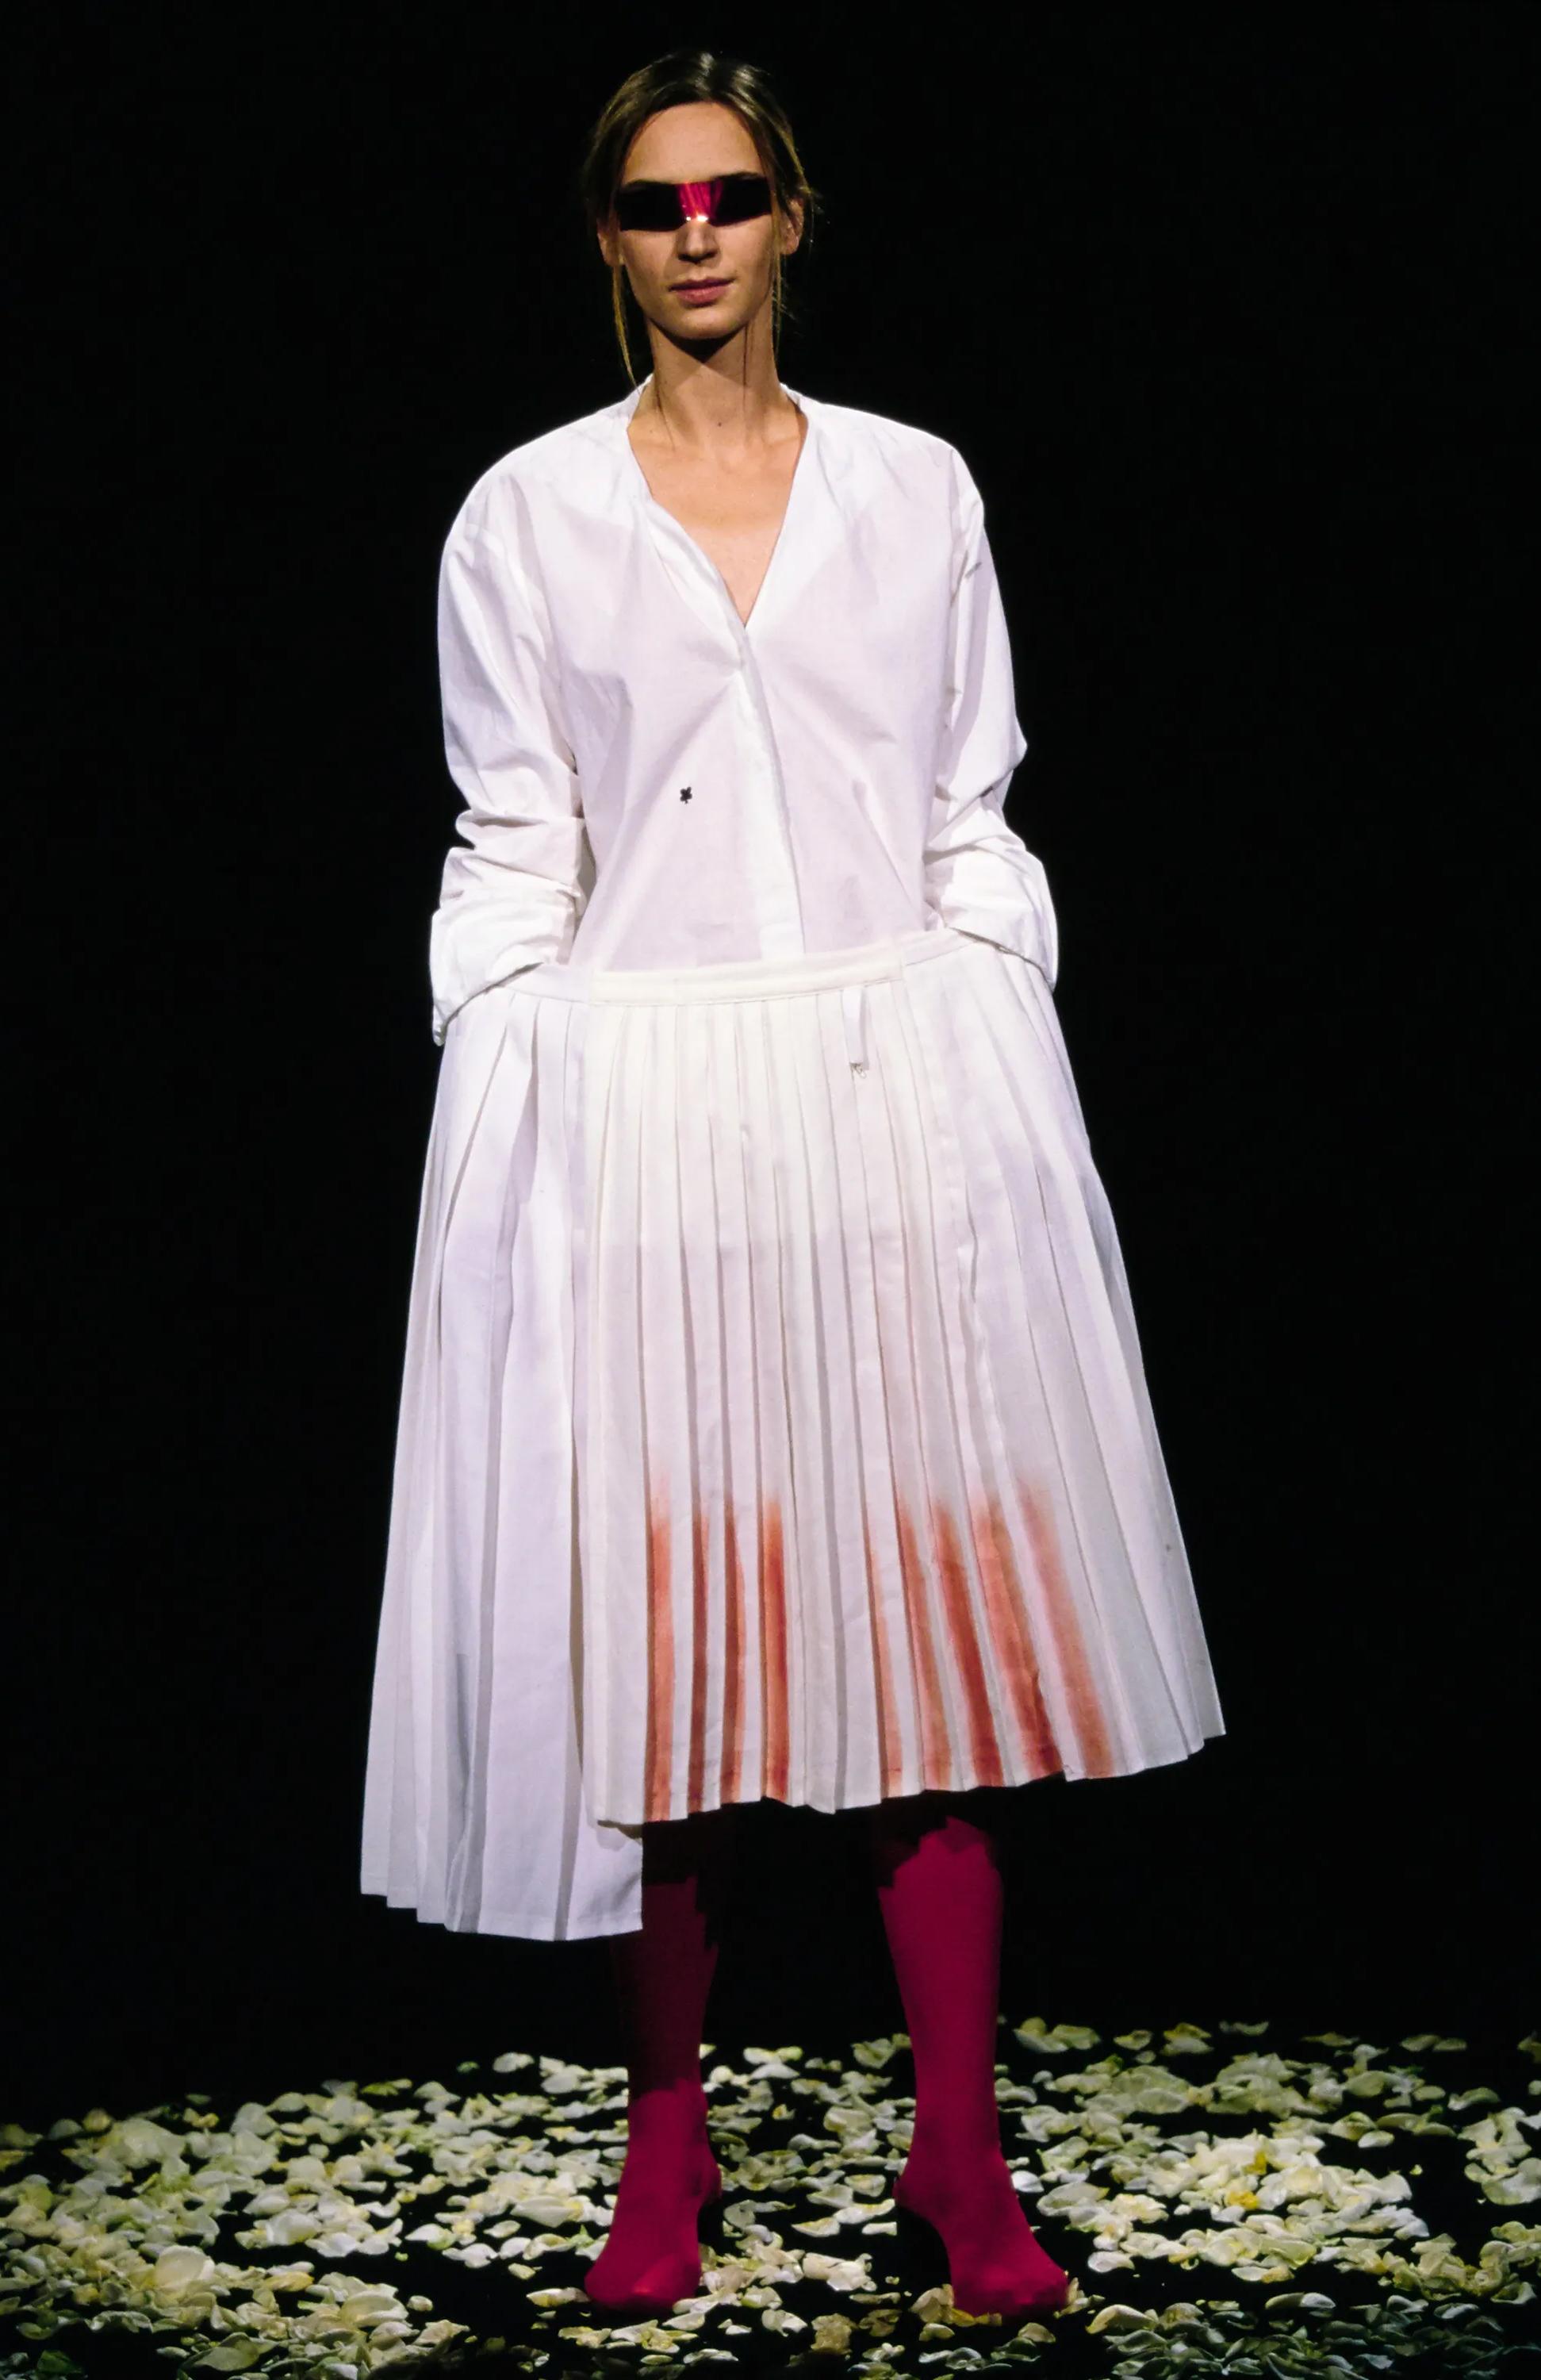 S/S 2001 Maison Martin Margiela One-of-One Artisanal Ecru Pleated Skirt 6